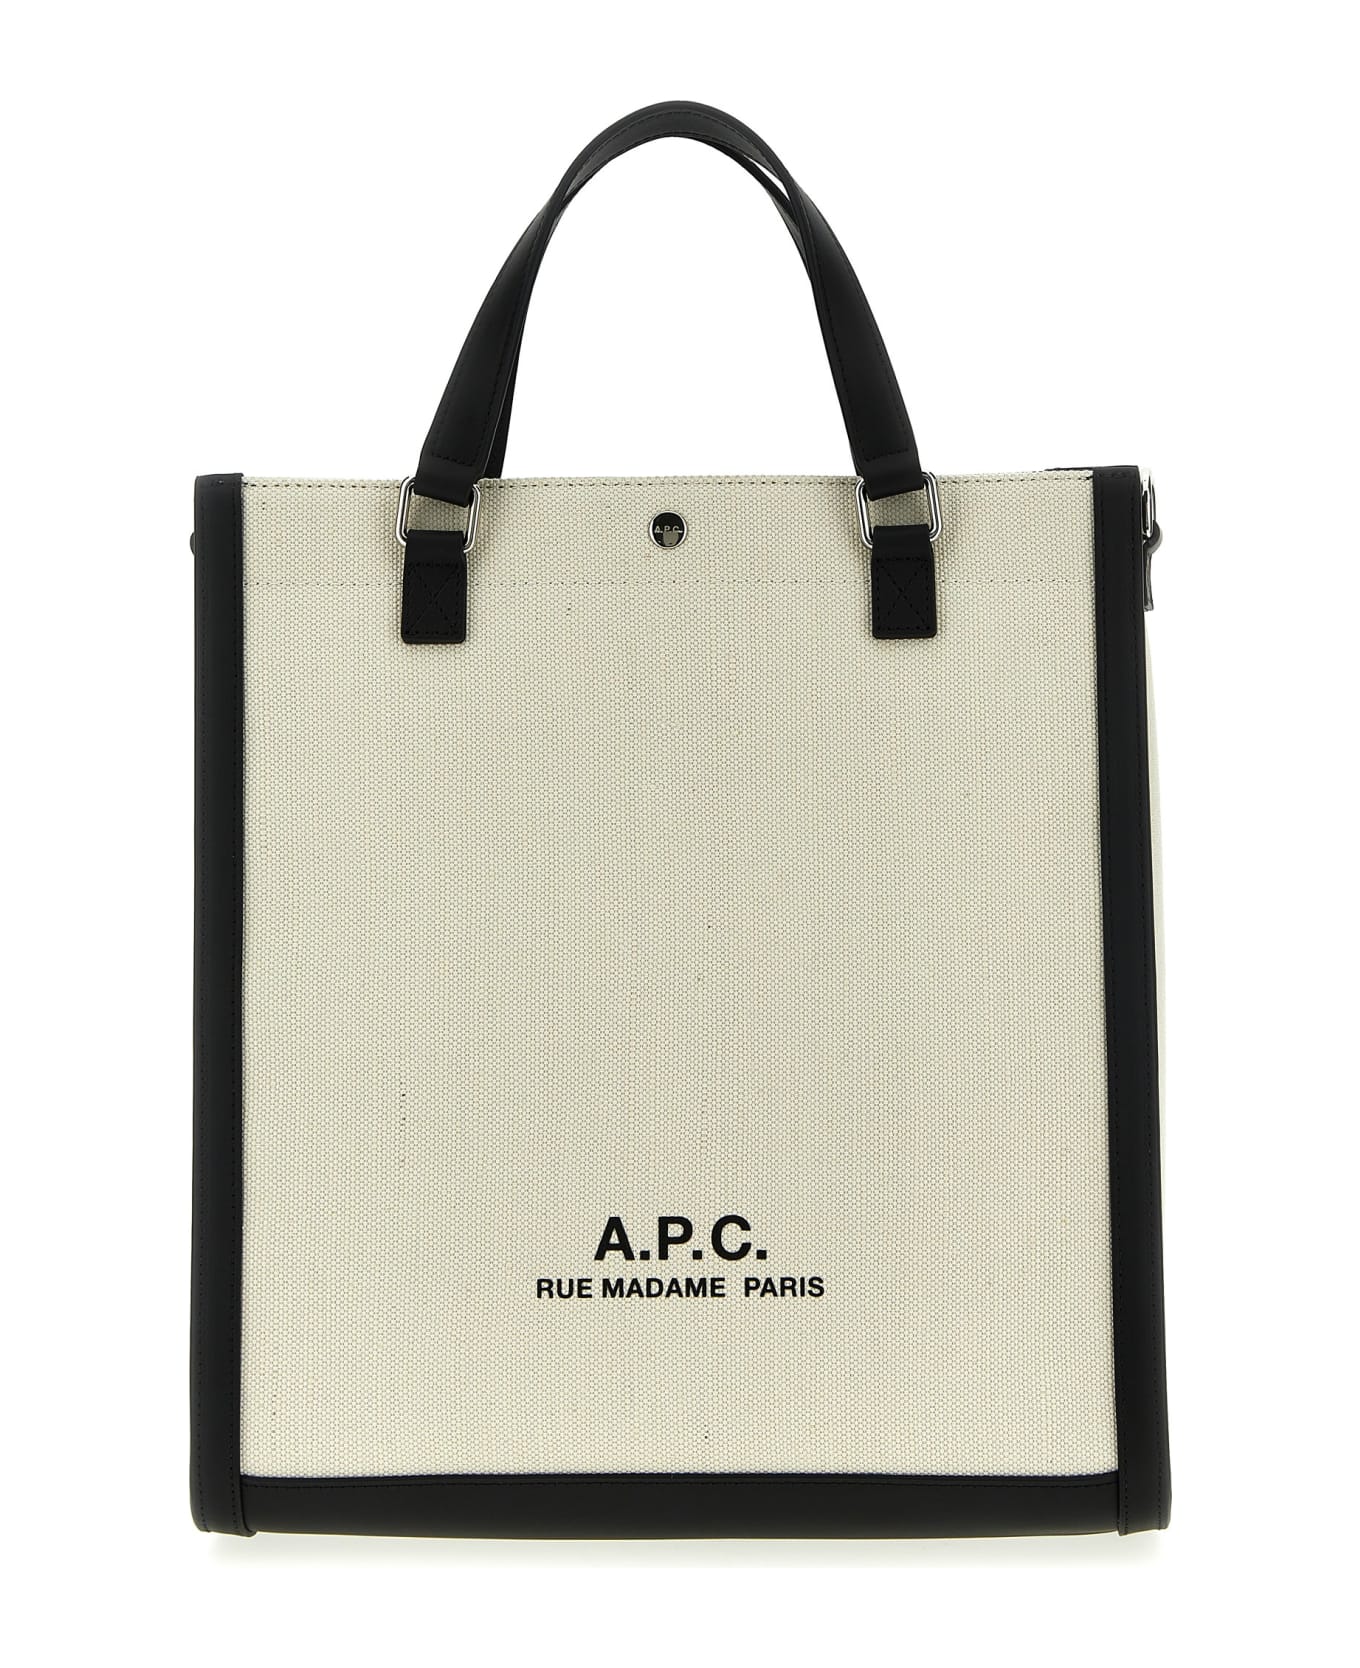 A.P.C. Camille 2.0 Shopping Bag - Beige